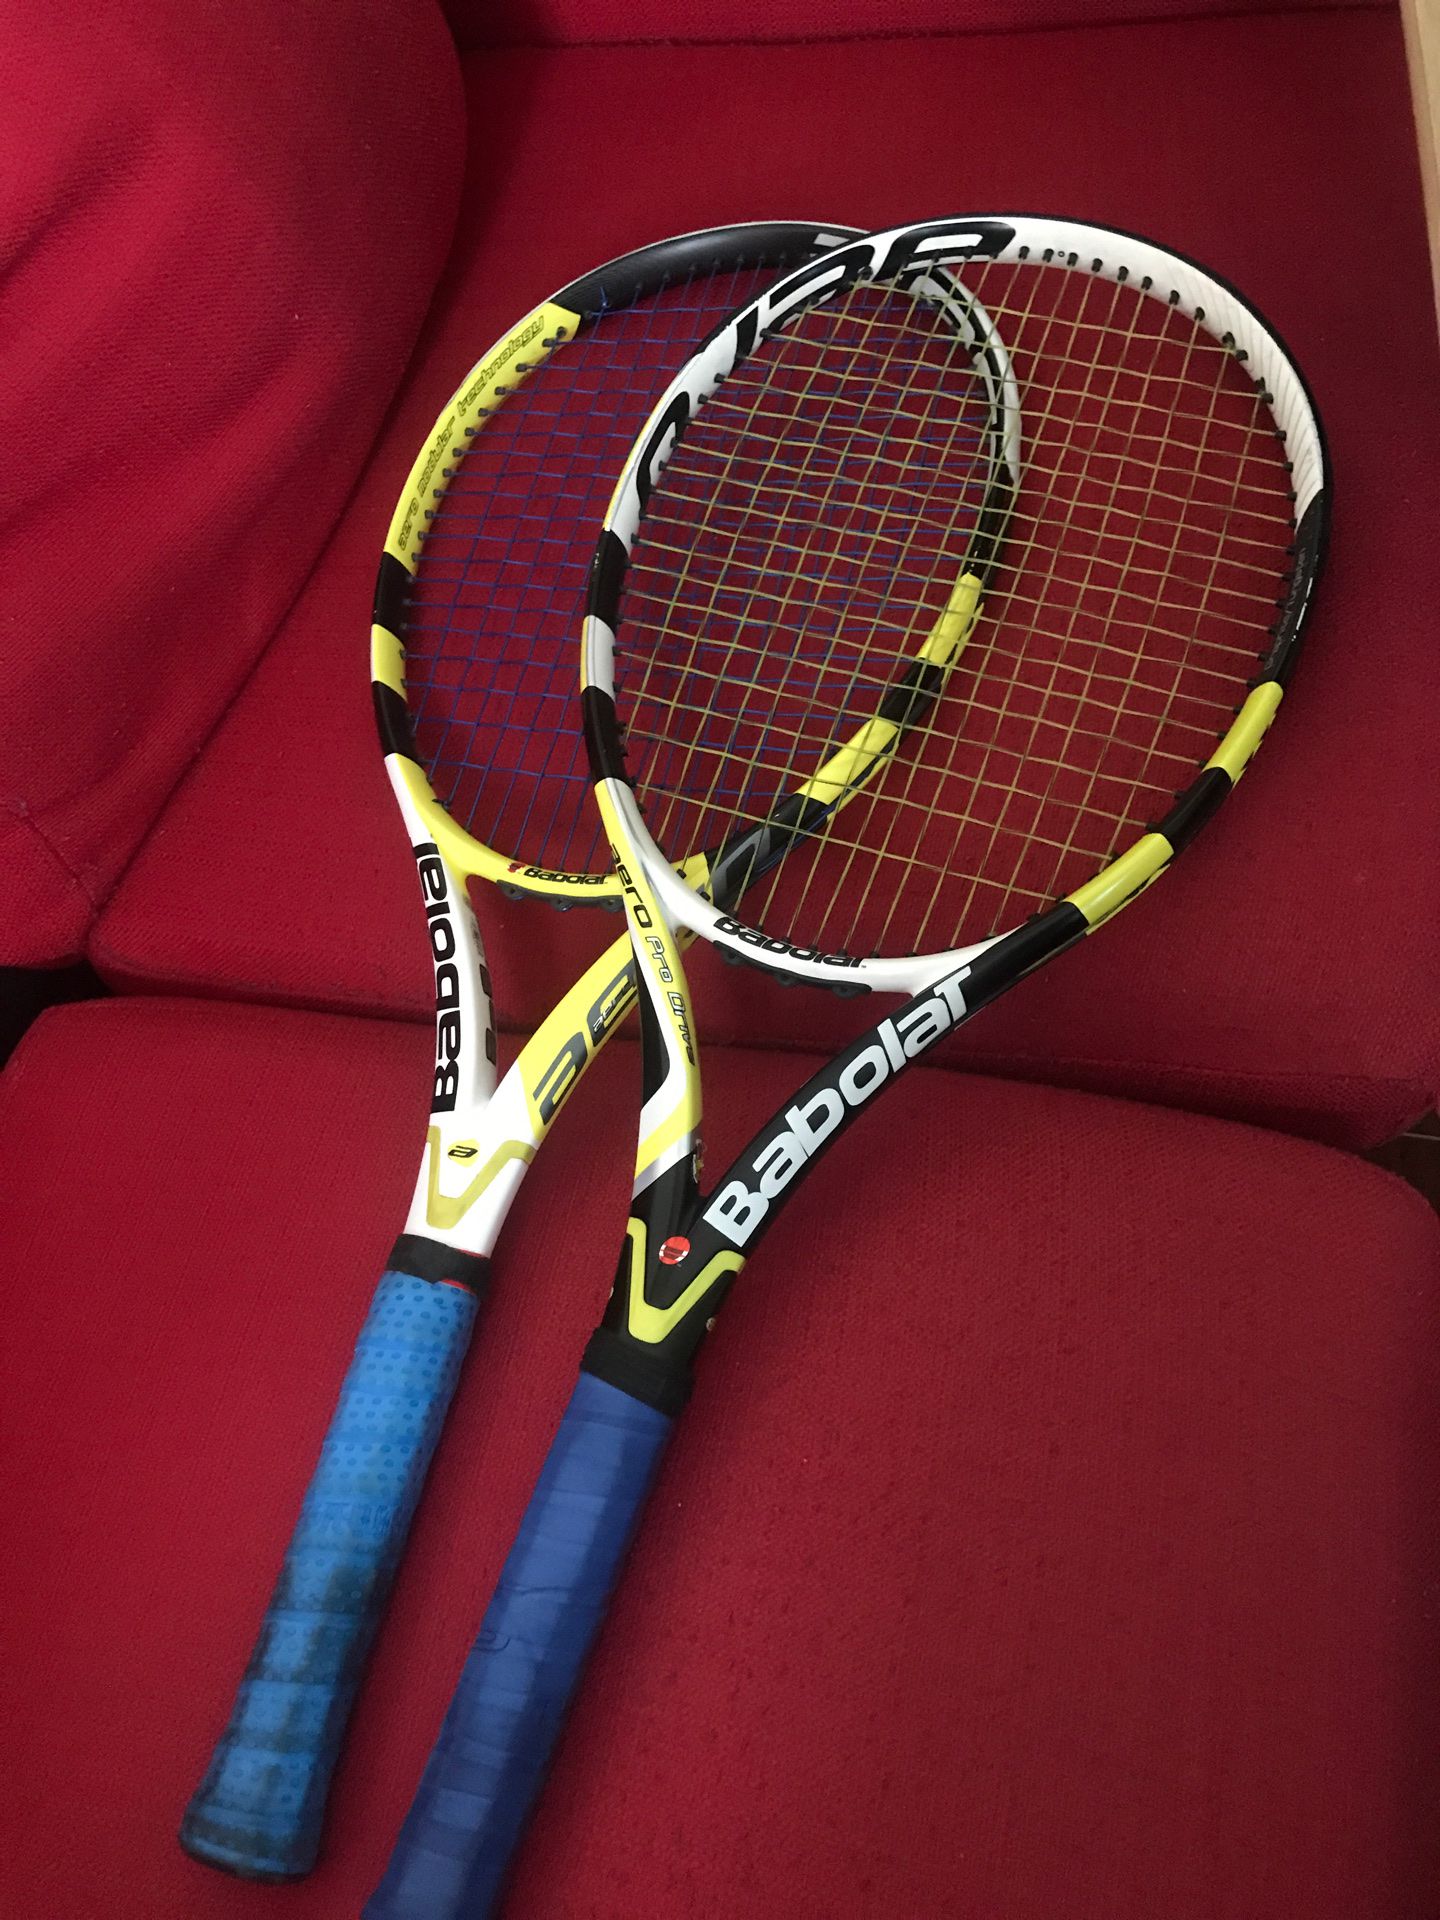 2 Babolat Tennis Rackets ..... 4 1/4 grip ...... 100 sq in